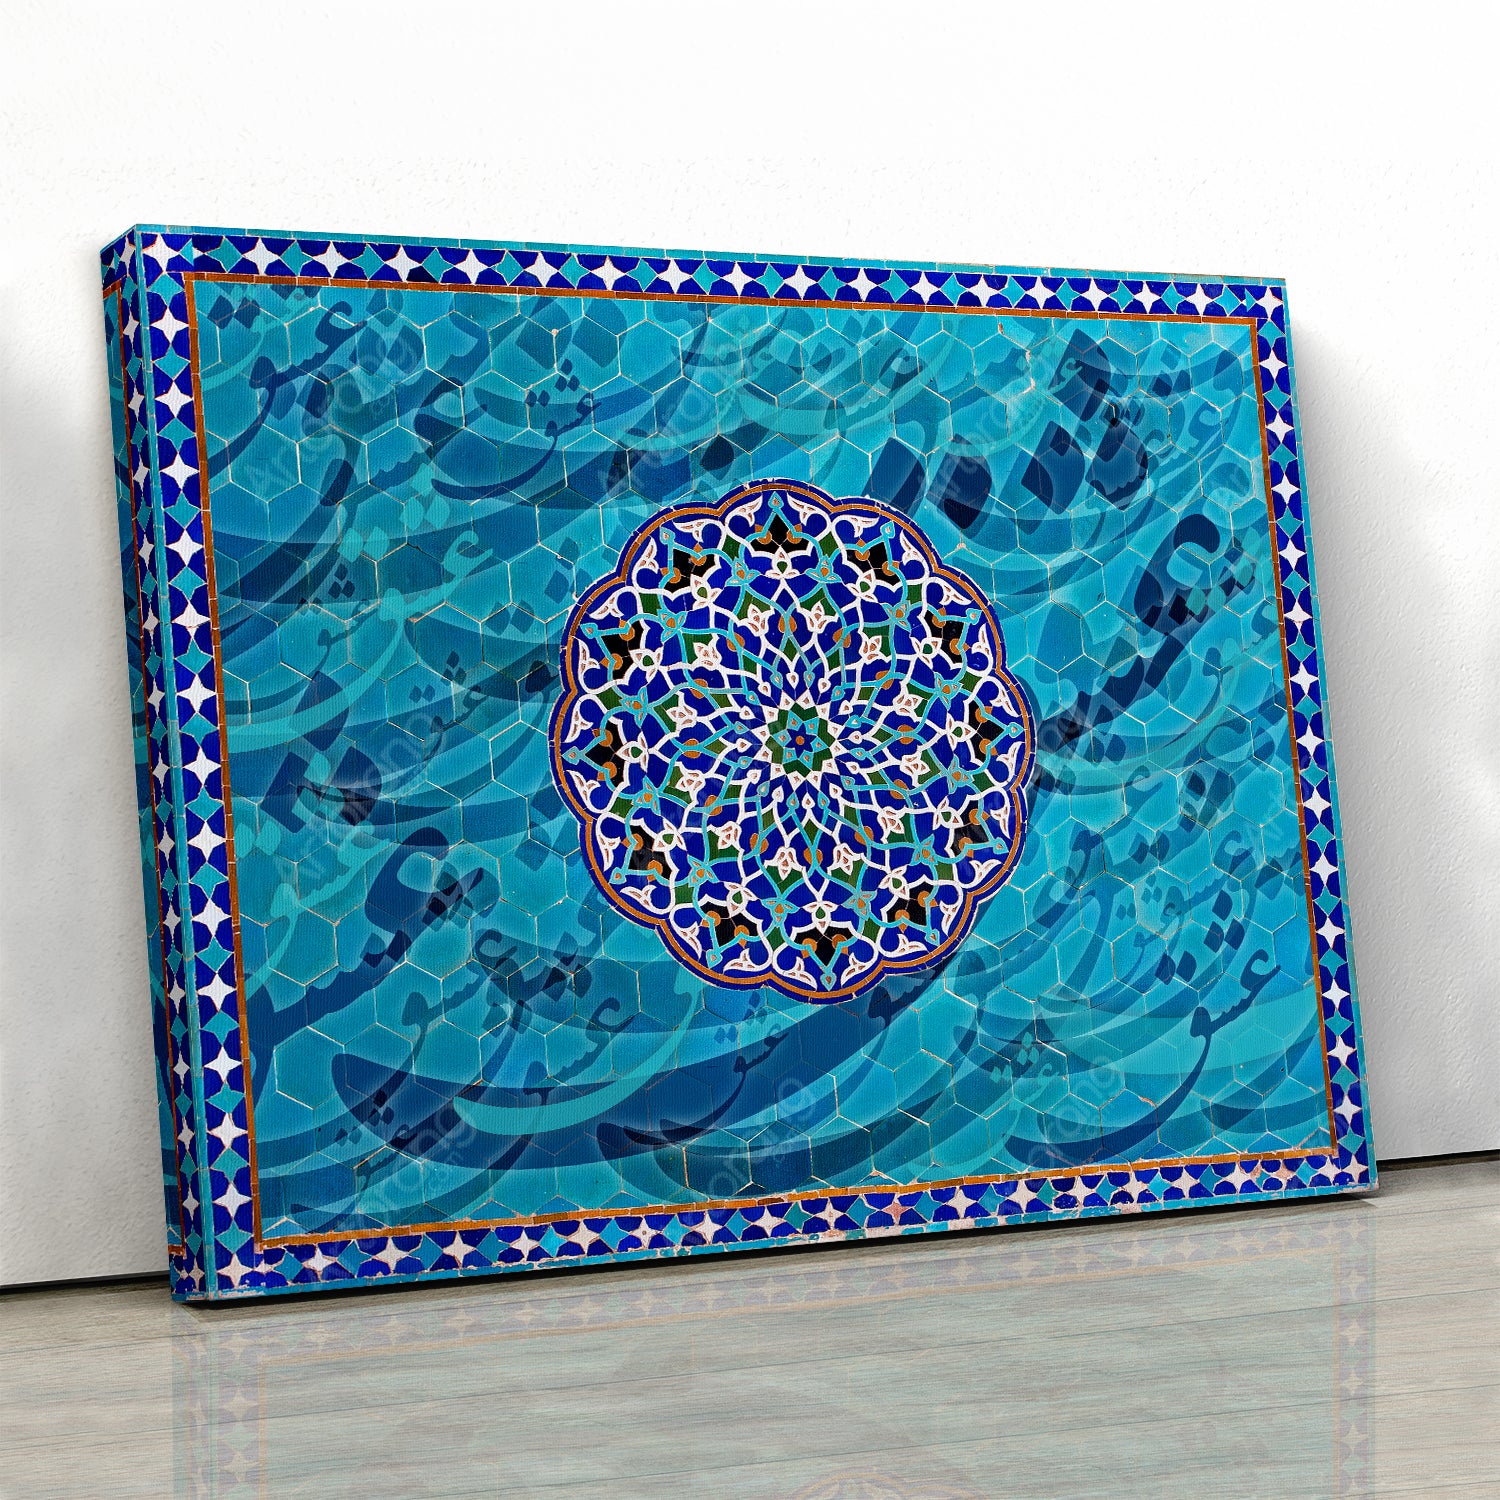 Persian tile with love Canvas Art | Persian tile | Arabic art | Islamic art | Iranian tile | middle eastern architecture - Artorang